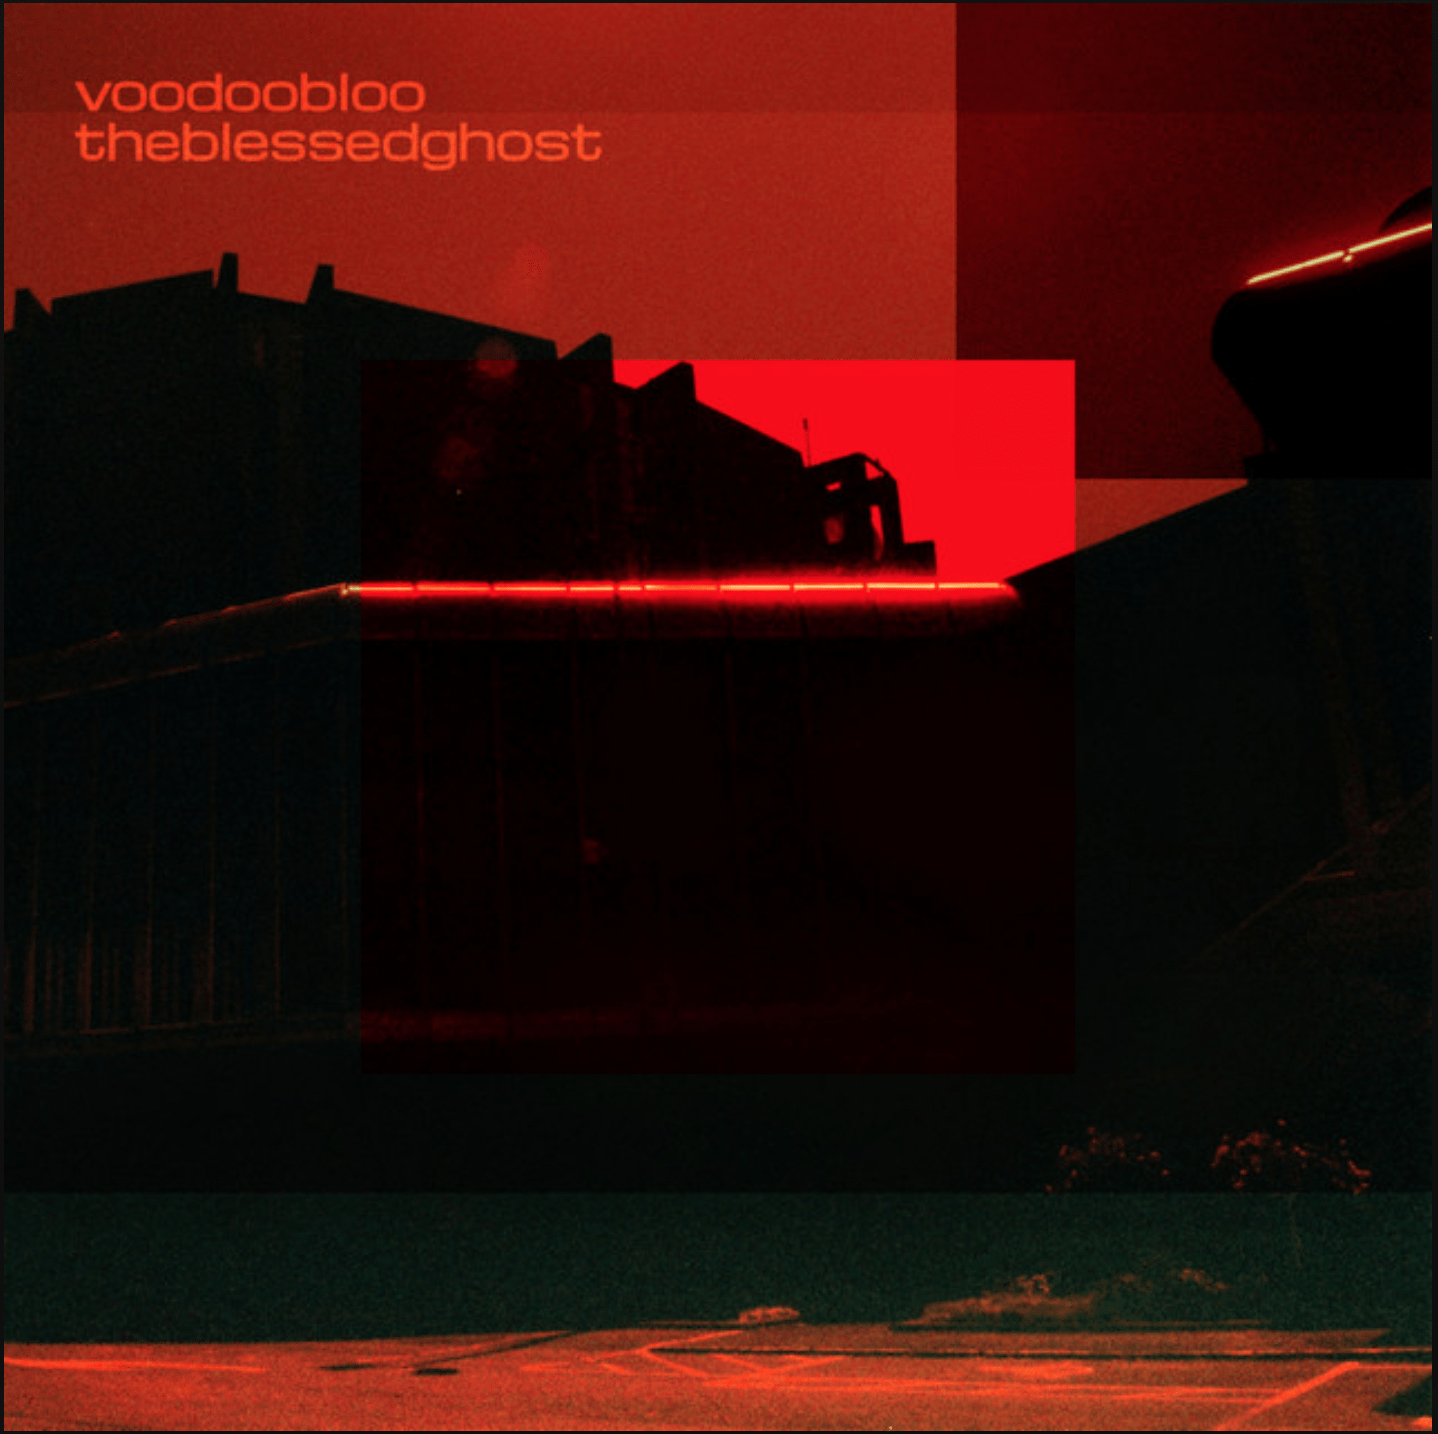 The Blessed Ghost (Original Album) by Voodoo Bloo